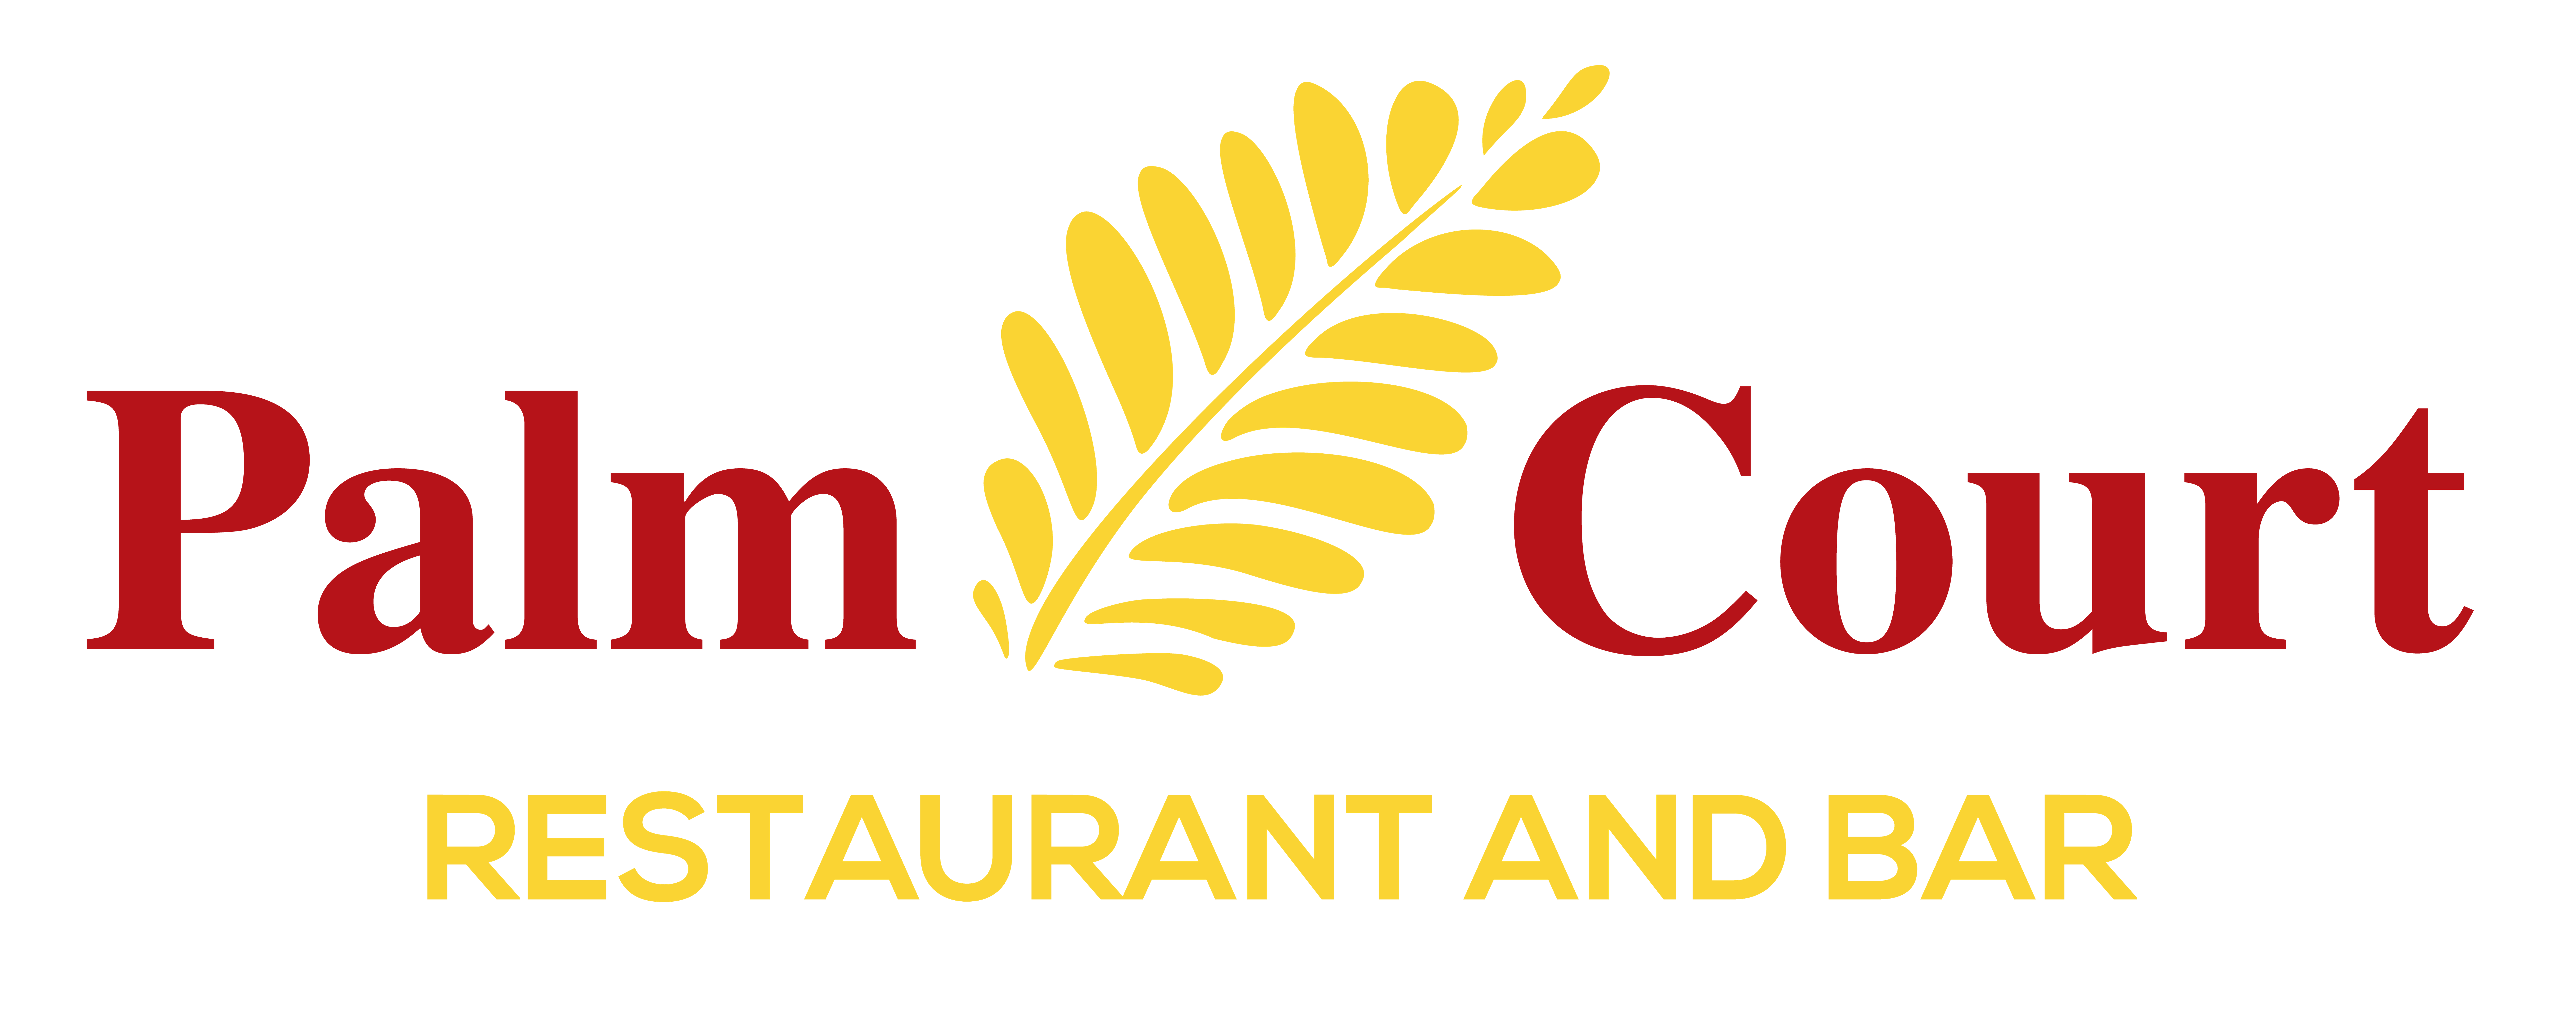 Palm Court Restaurant and Bar